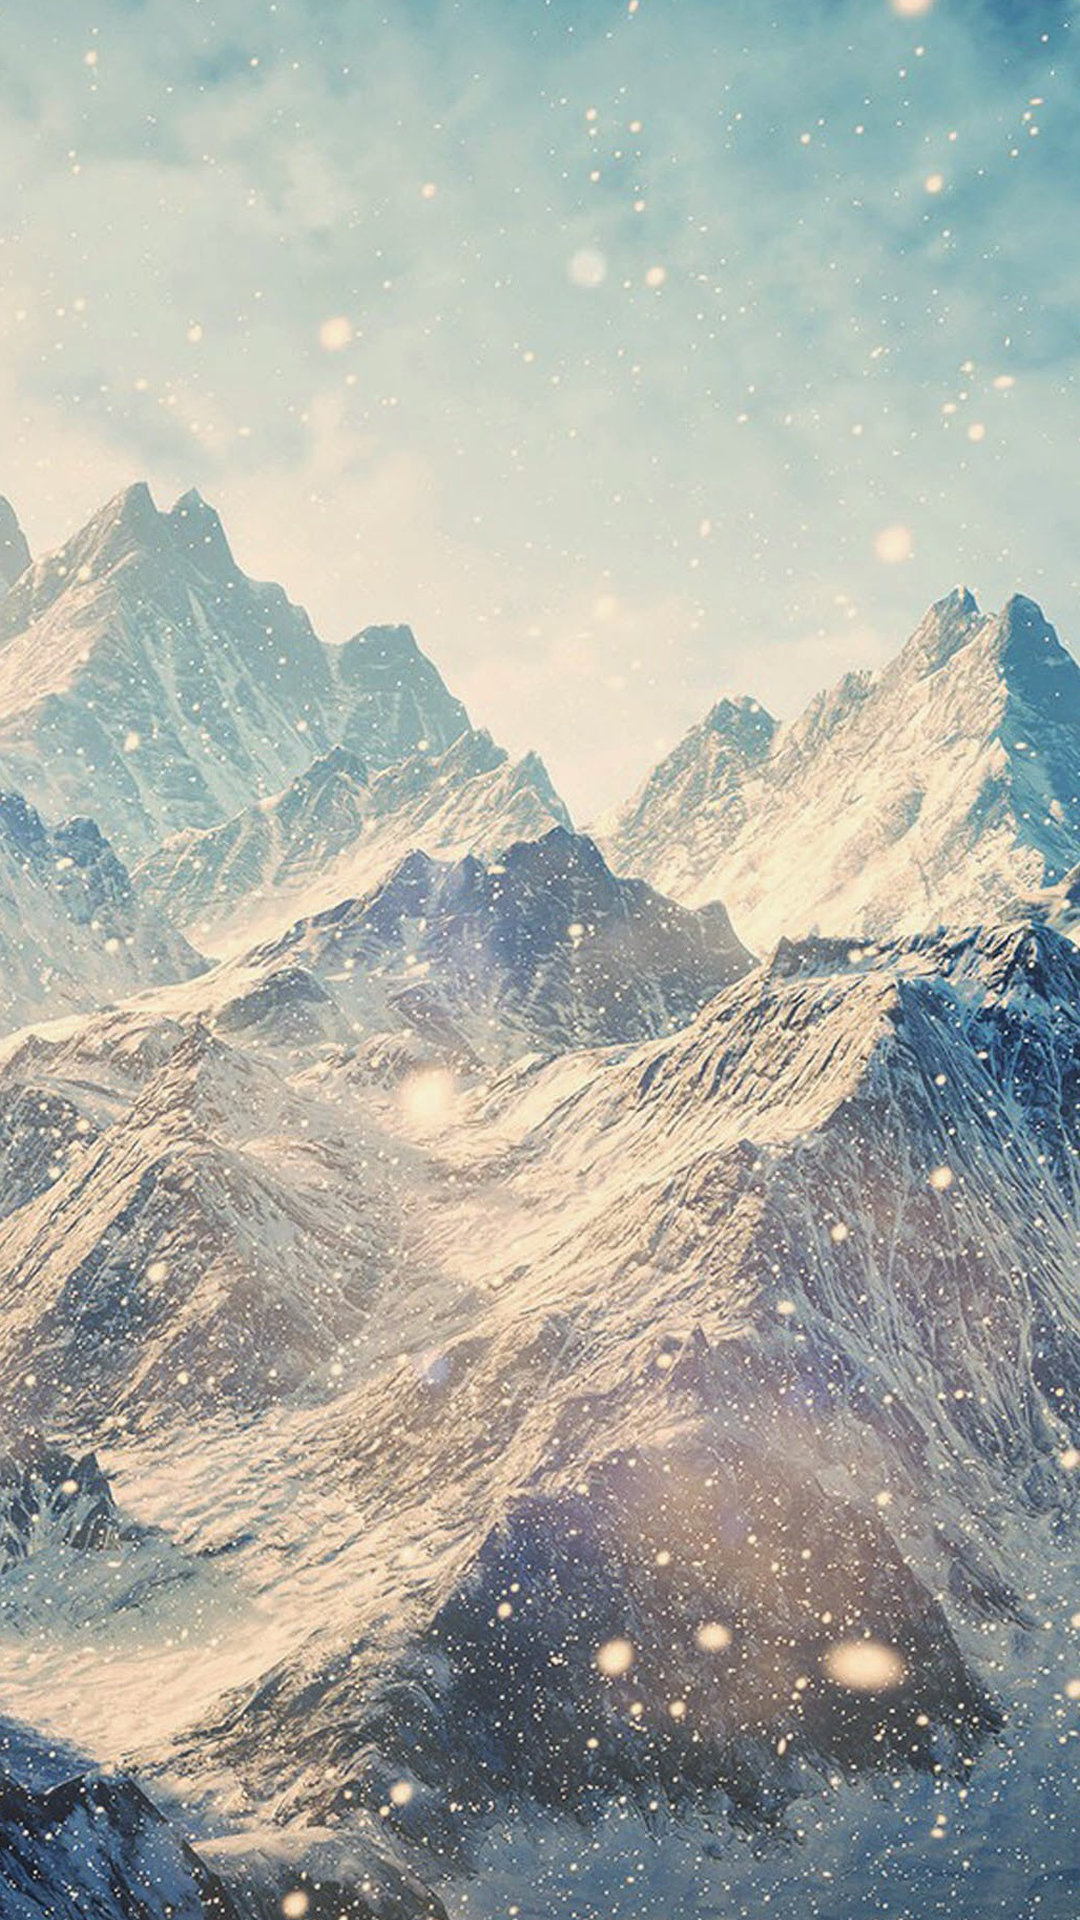 Himalayan-Mountains-Landscape-Snowfall-iPhone-6-wallpaper.